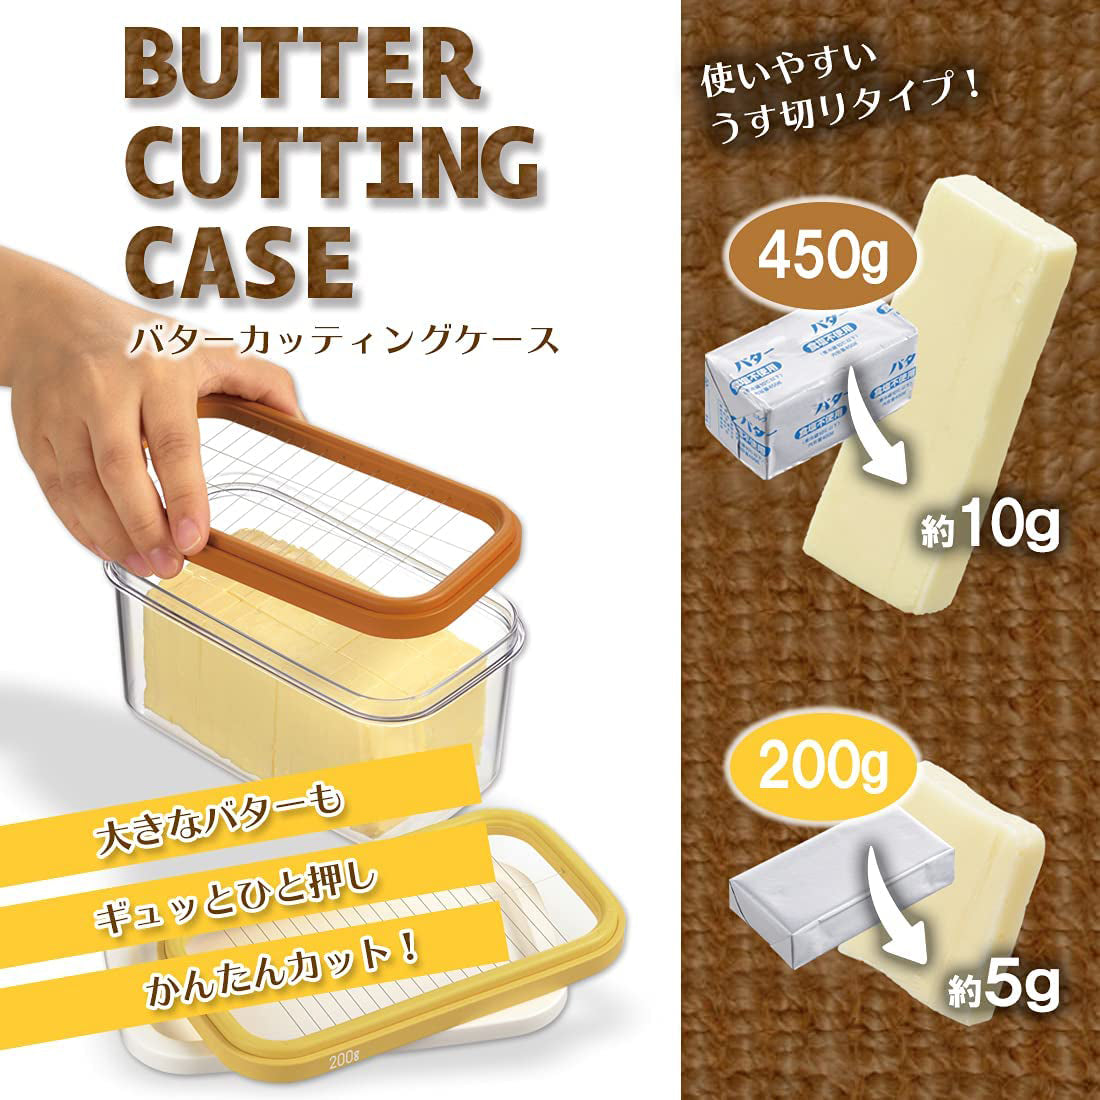 AKEBONO Butter Cutting Case